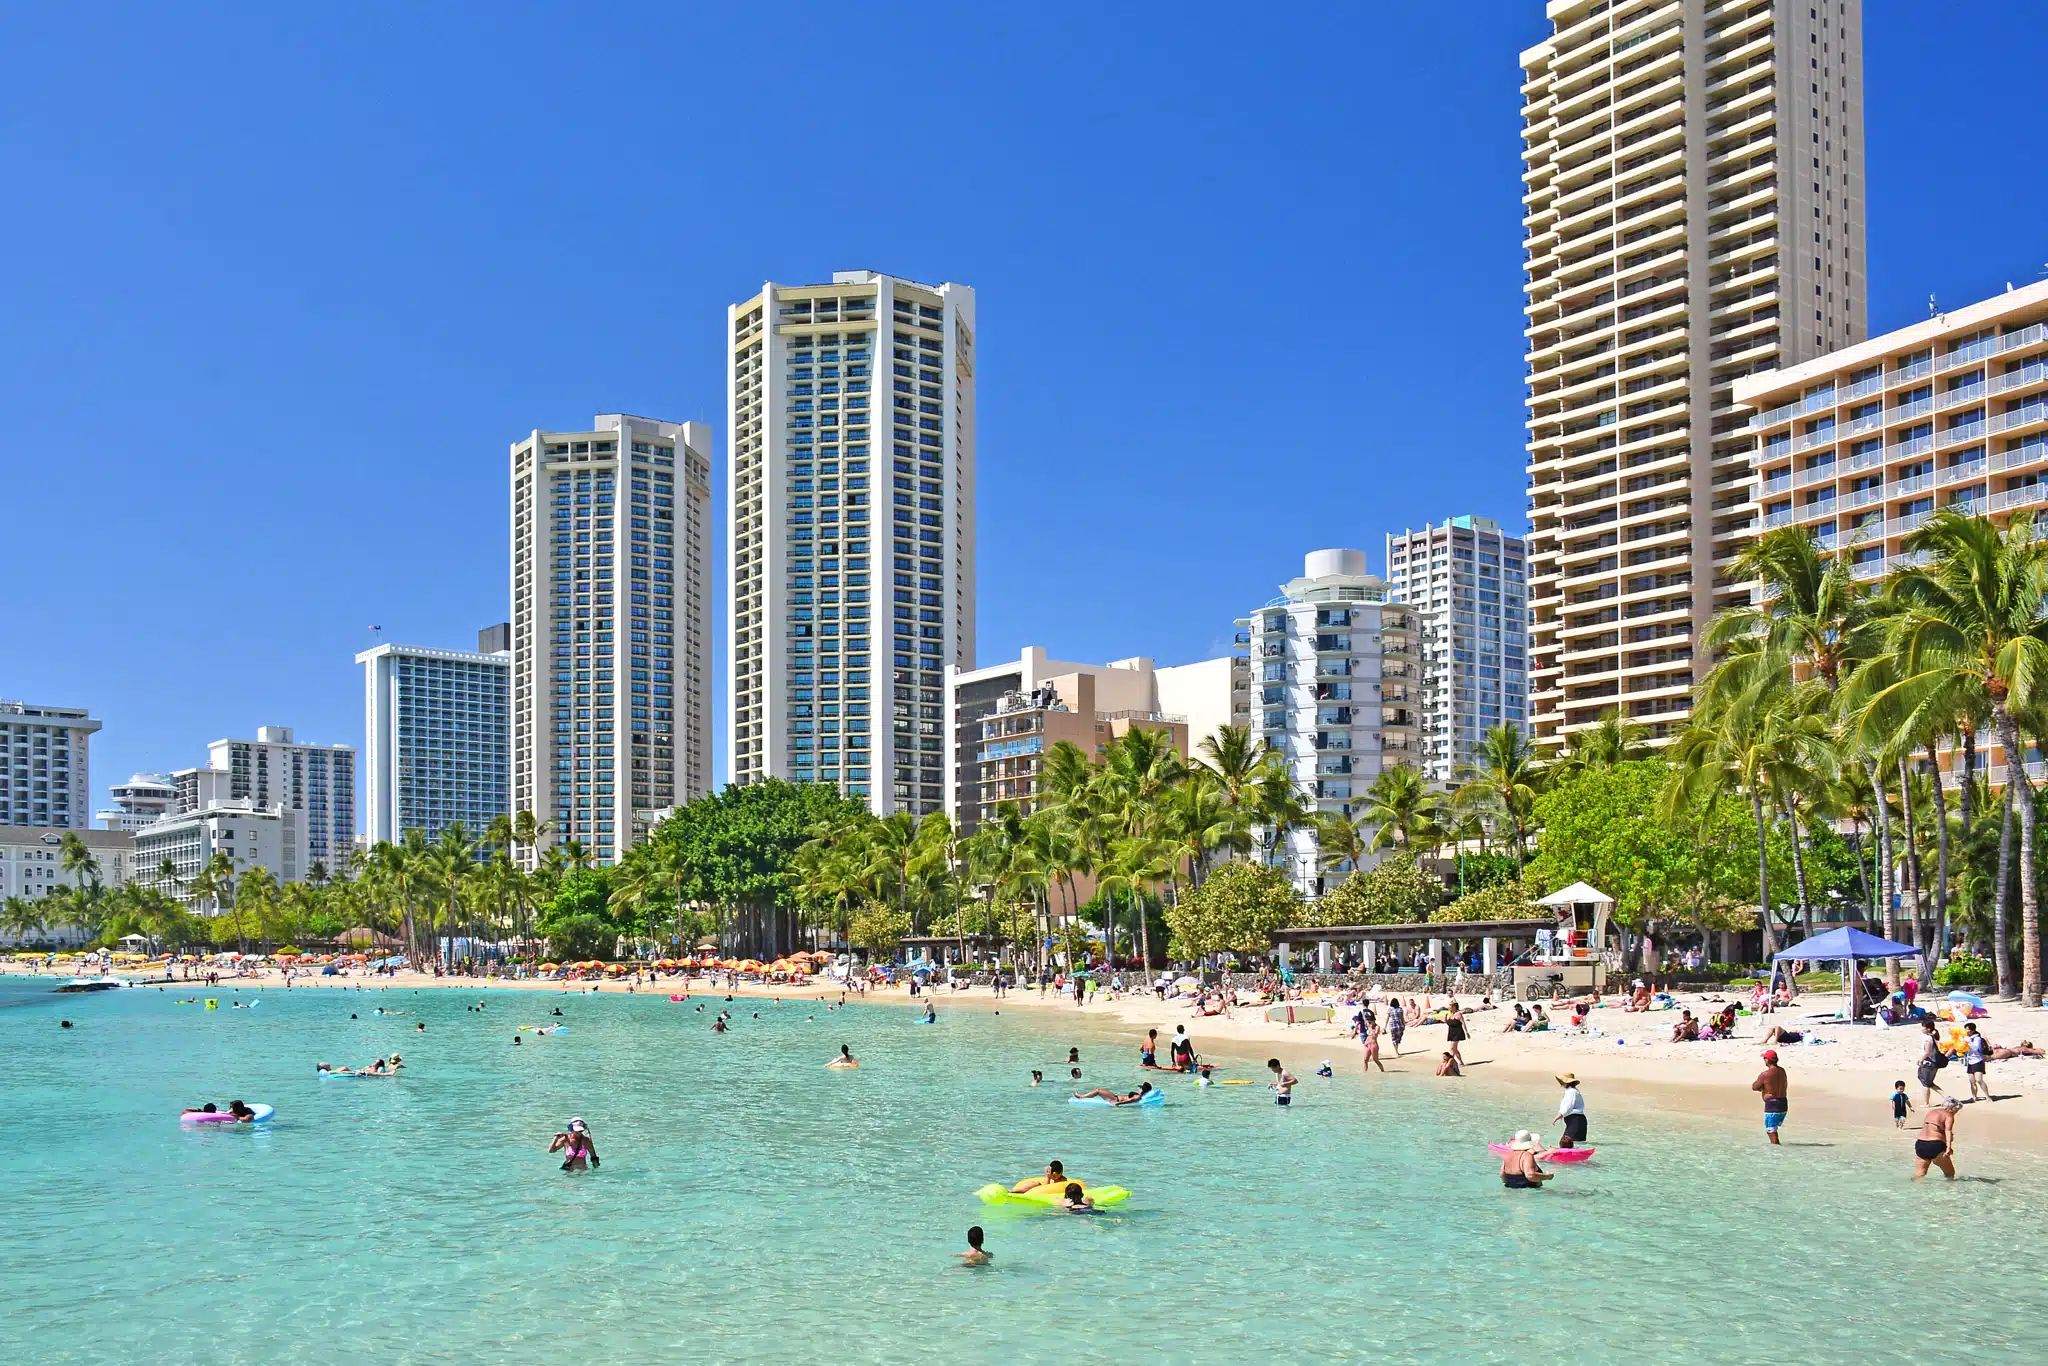 Kuhio Beach is a Beach located in the city of Honolulu on Oahu, Hawaii